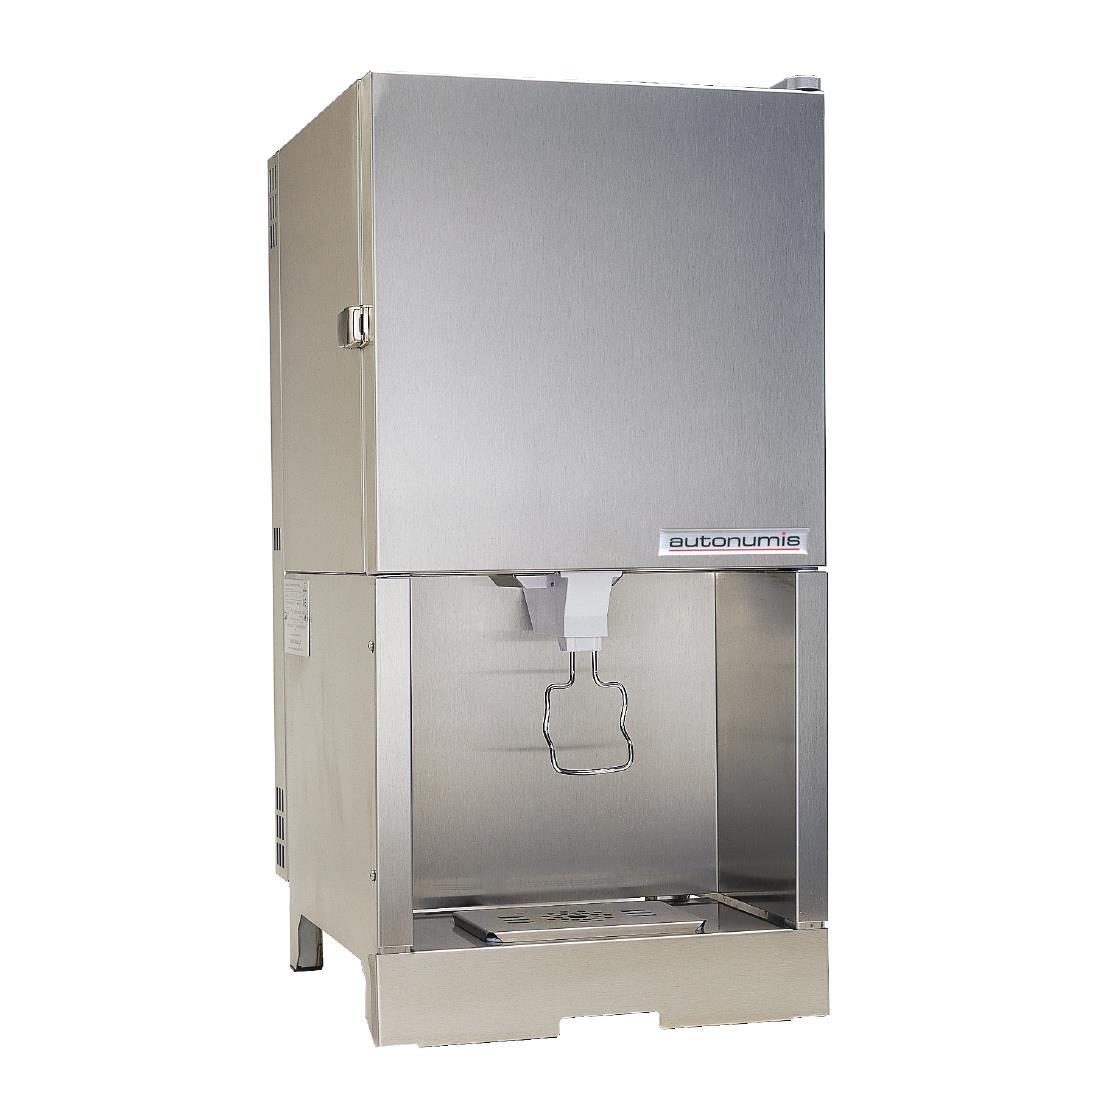 Autonumis Coola Bag In Box Milk Dispenser A10207 - GN382  - 1